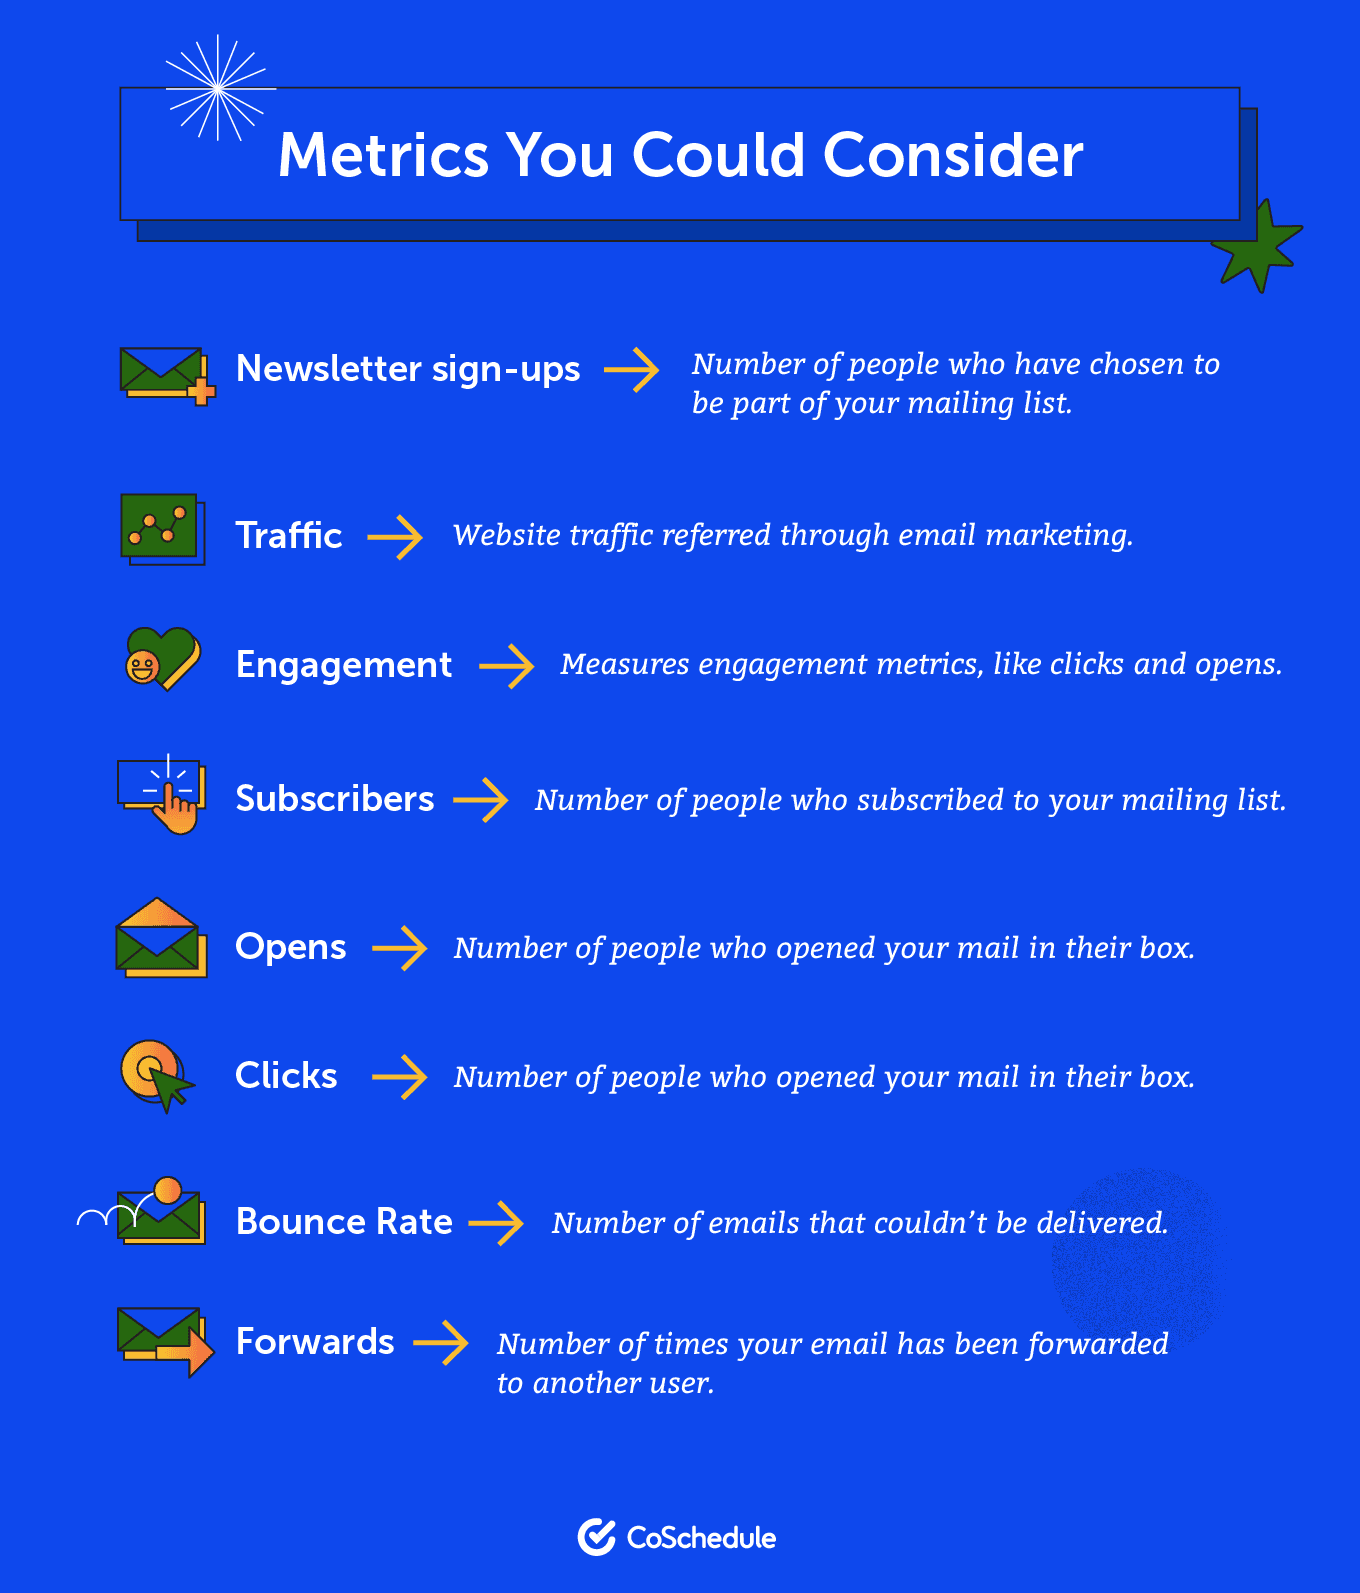 Metrics to consider